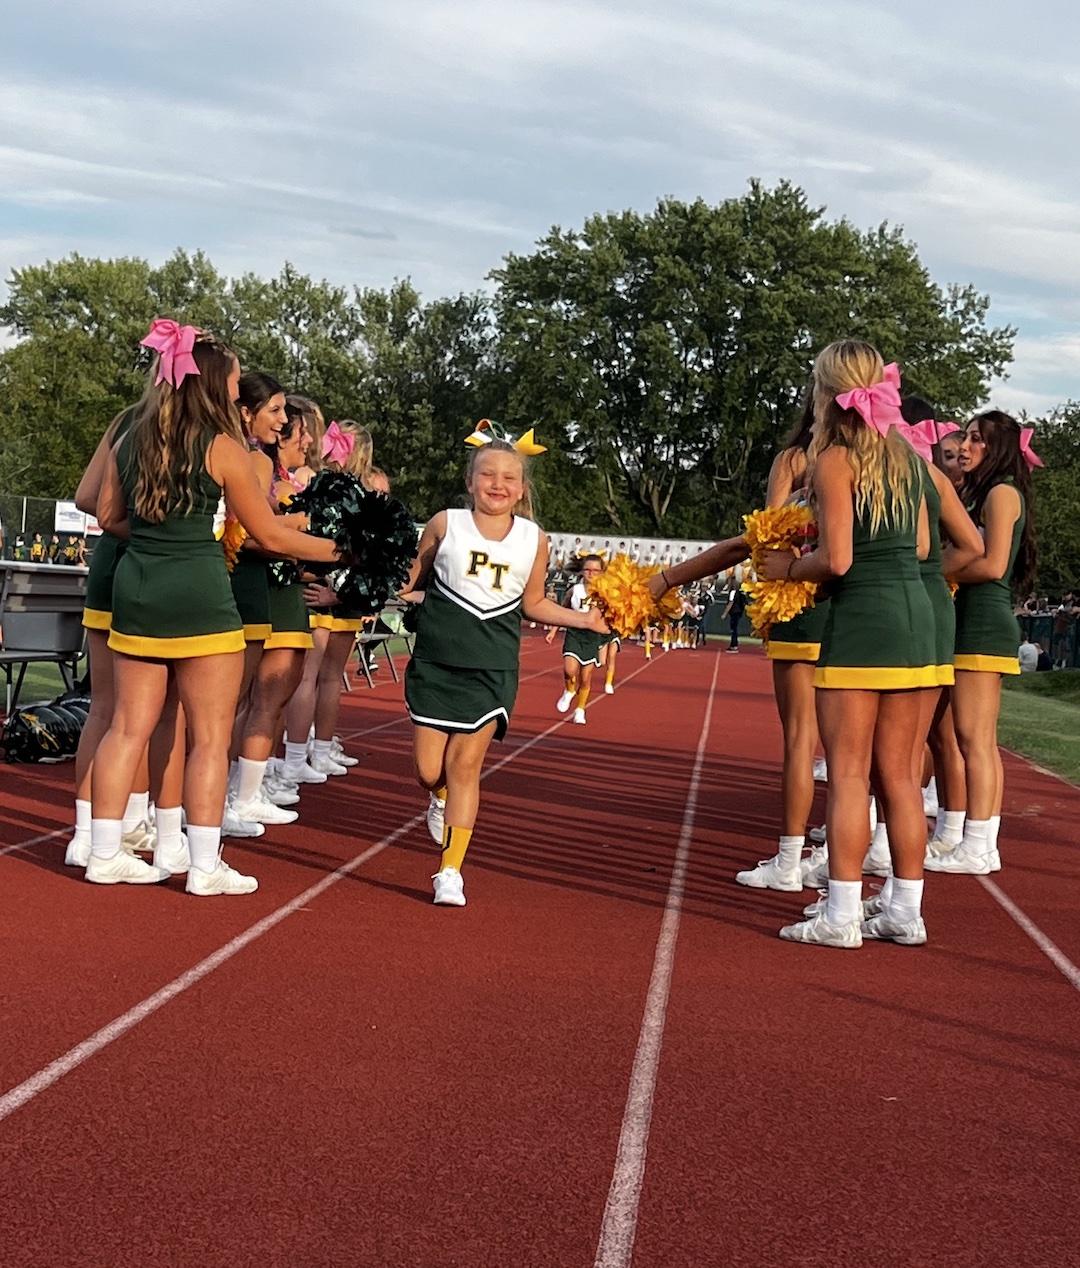 First-grade midget cheerleader Gianna Capoccioni runs down the sideline